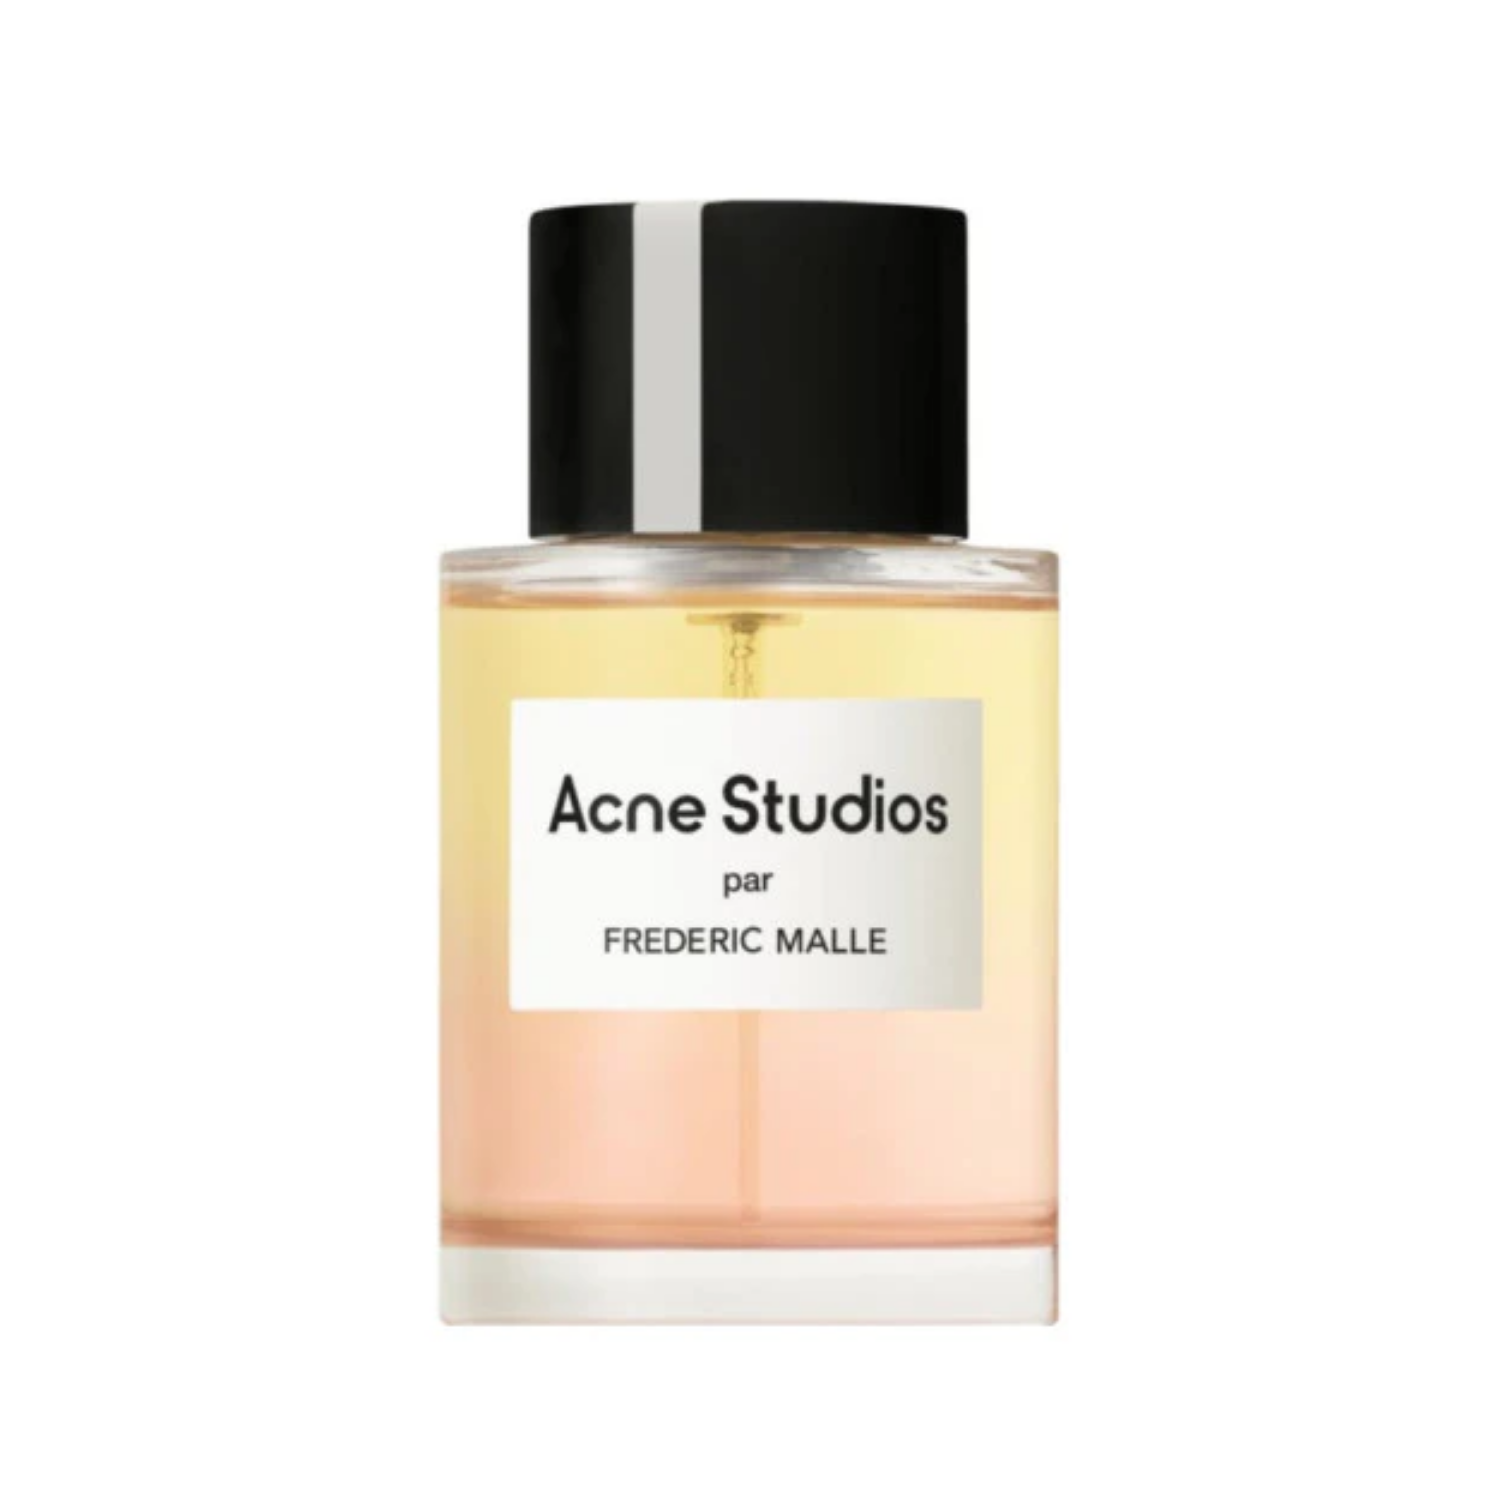 Acne Studios - Frederic Malle